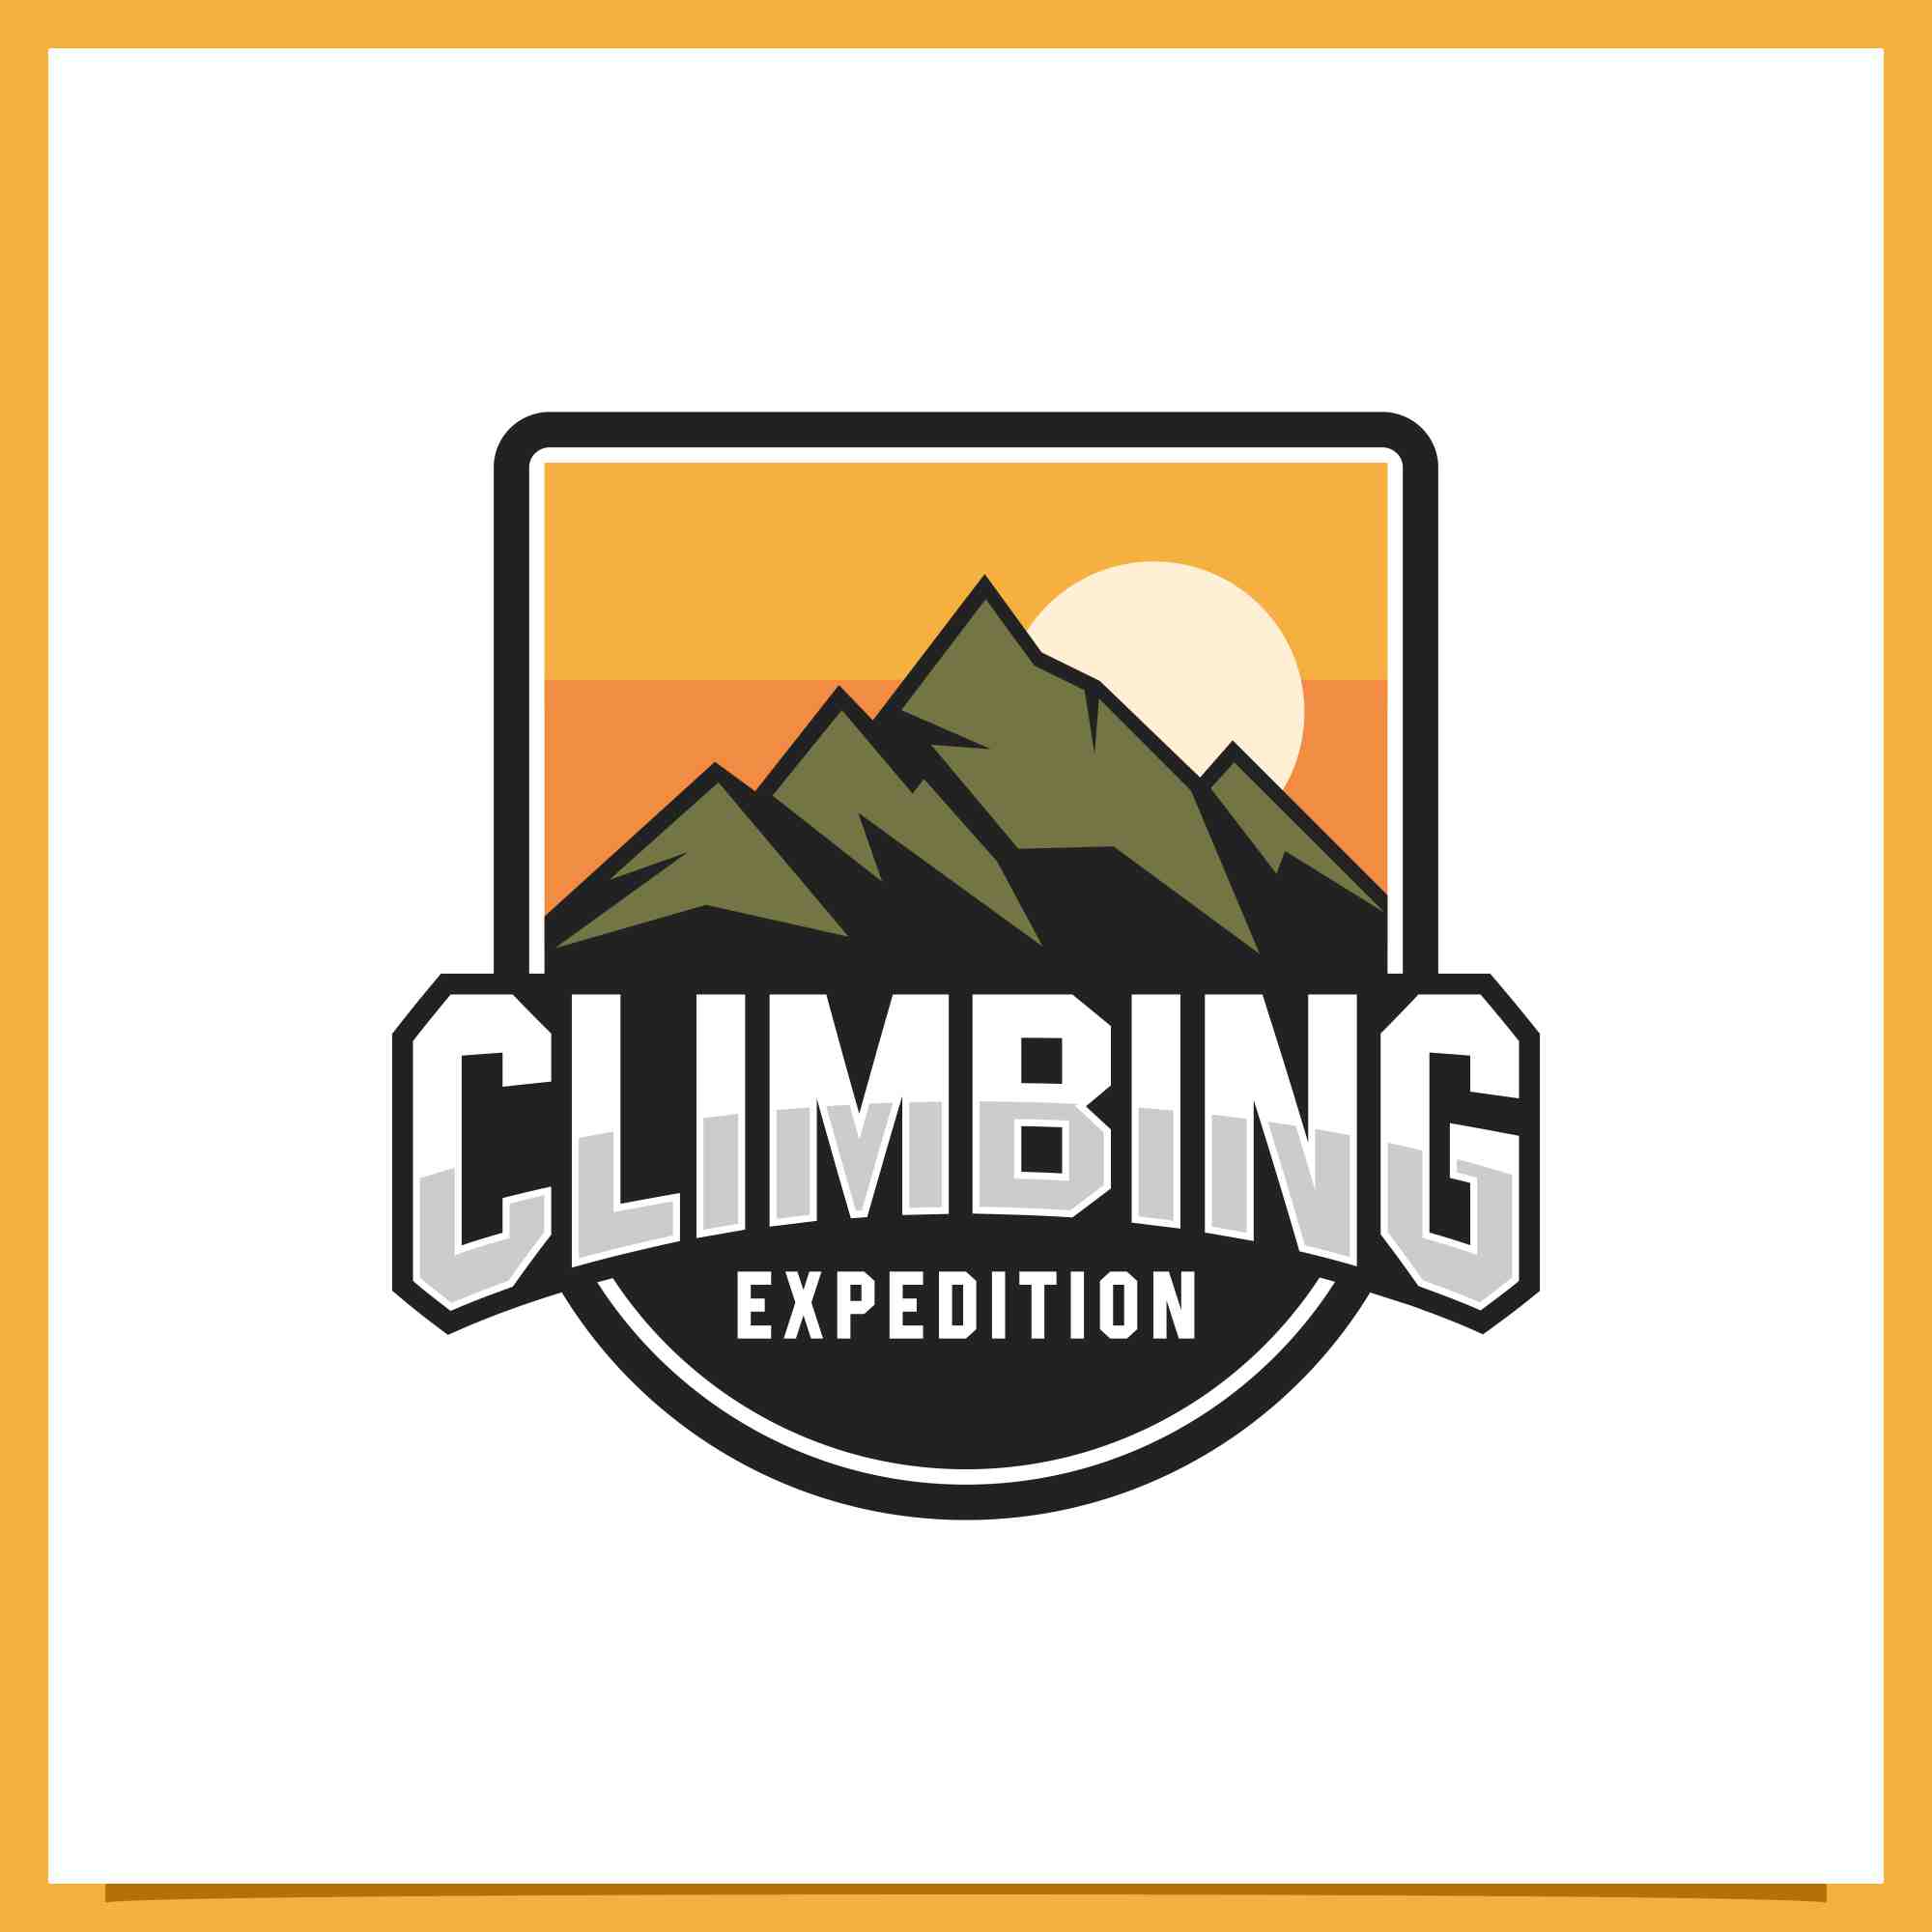 Set Climbing mountain adventure badge design collection - $4 preview image.